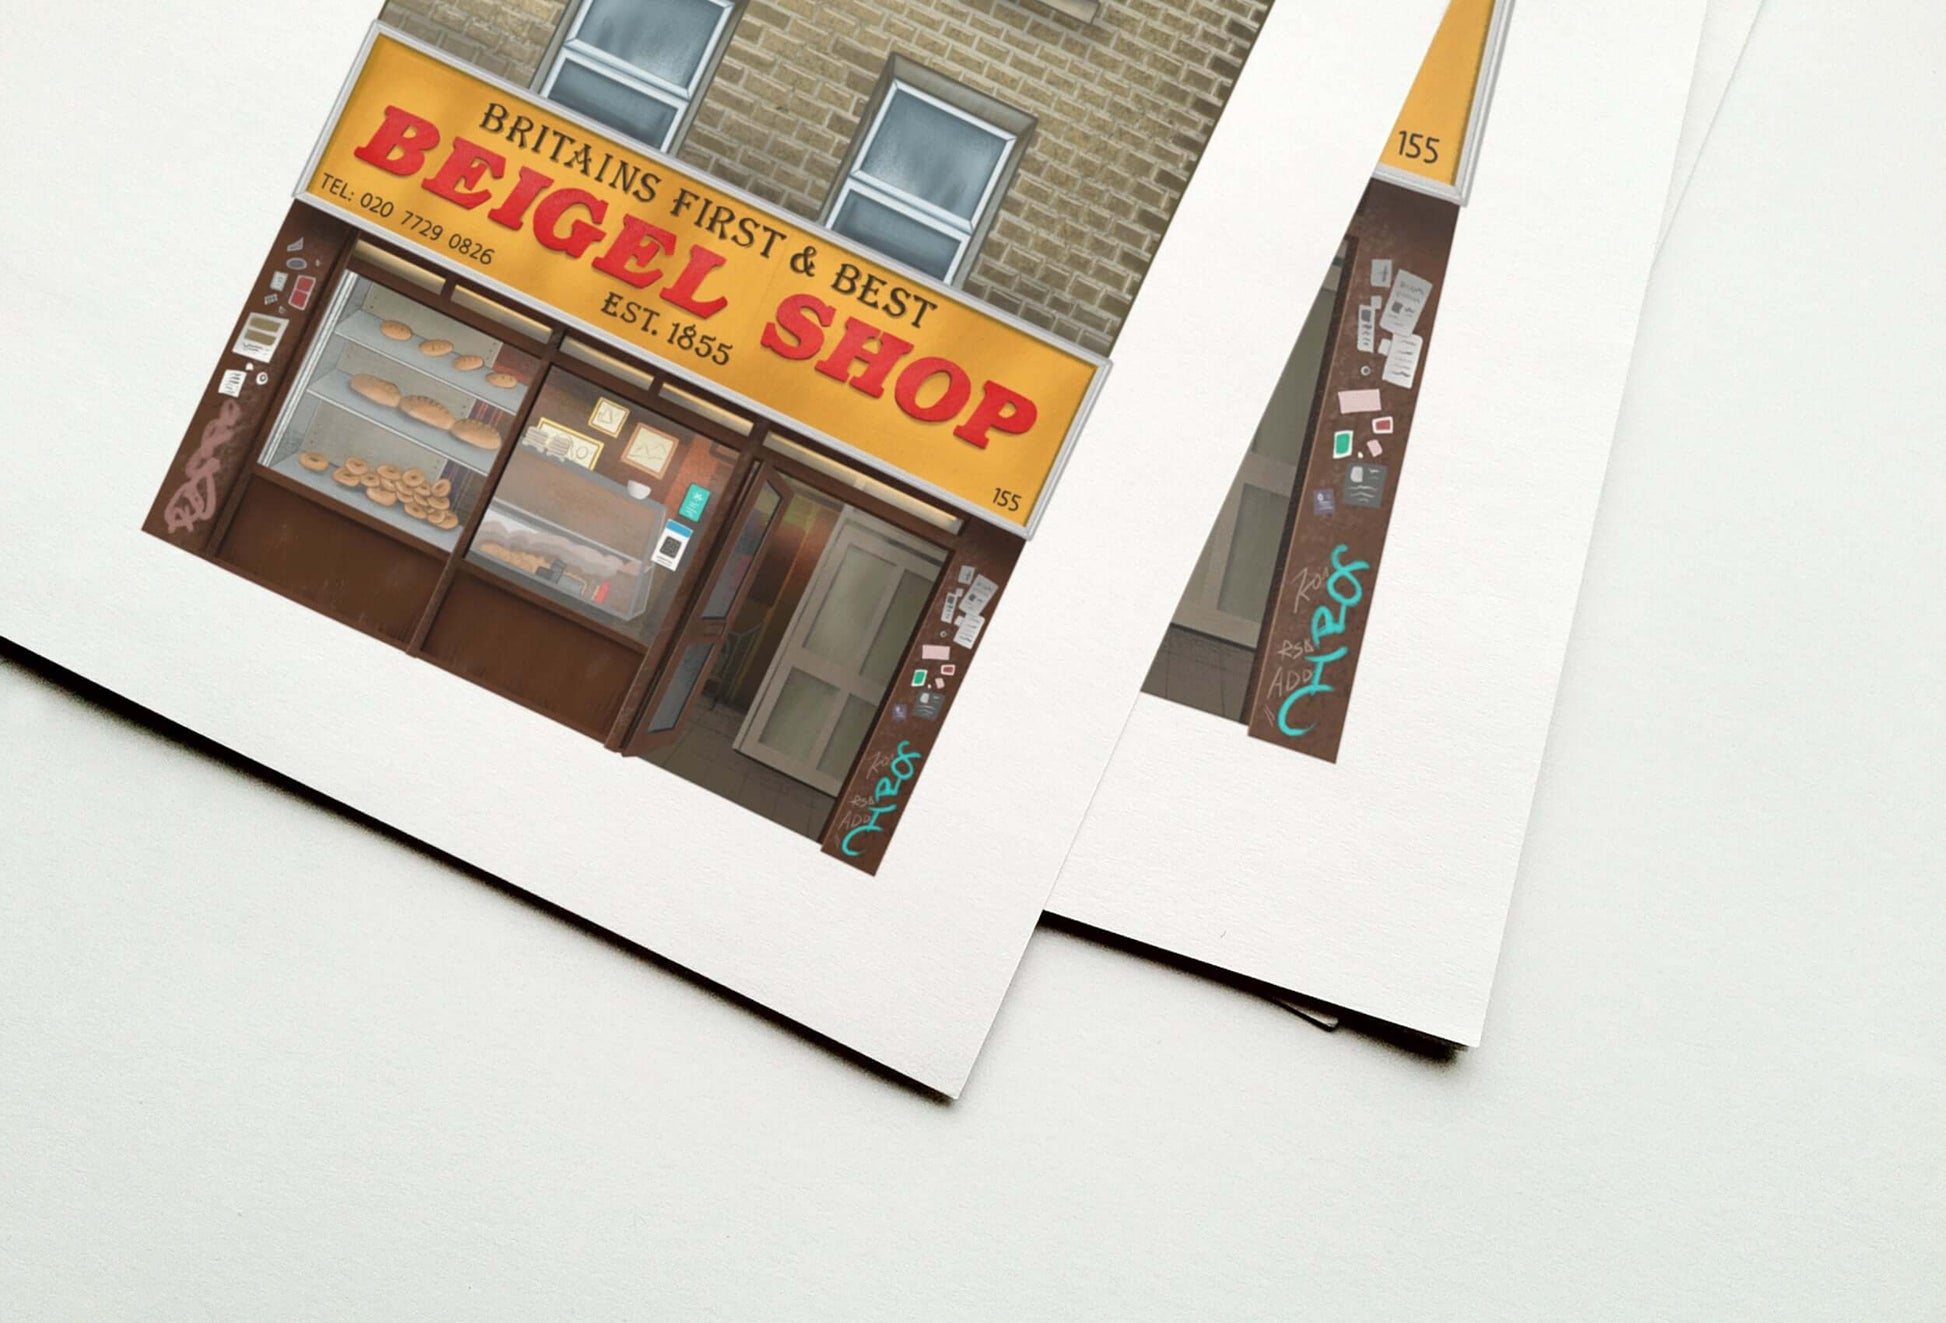 Britains first & best Beigel Shop Bakery Art Print, Brick Lane, East London